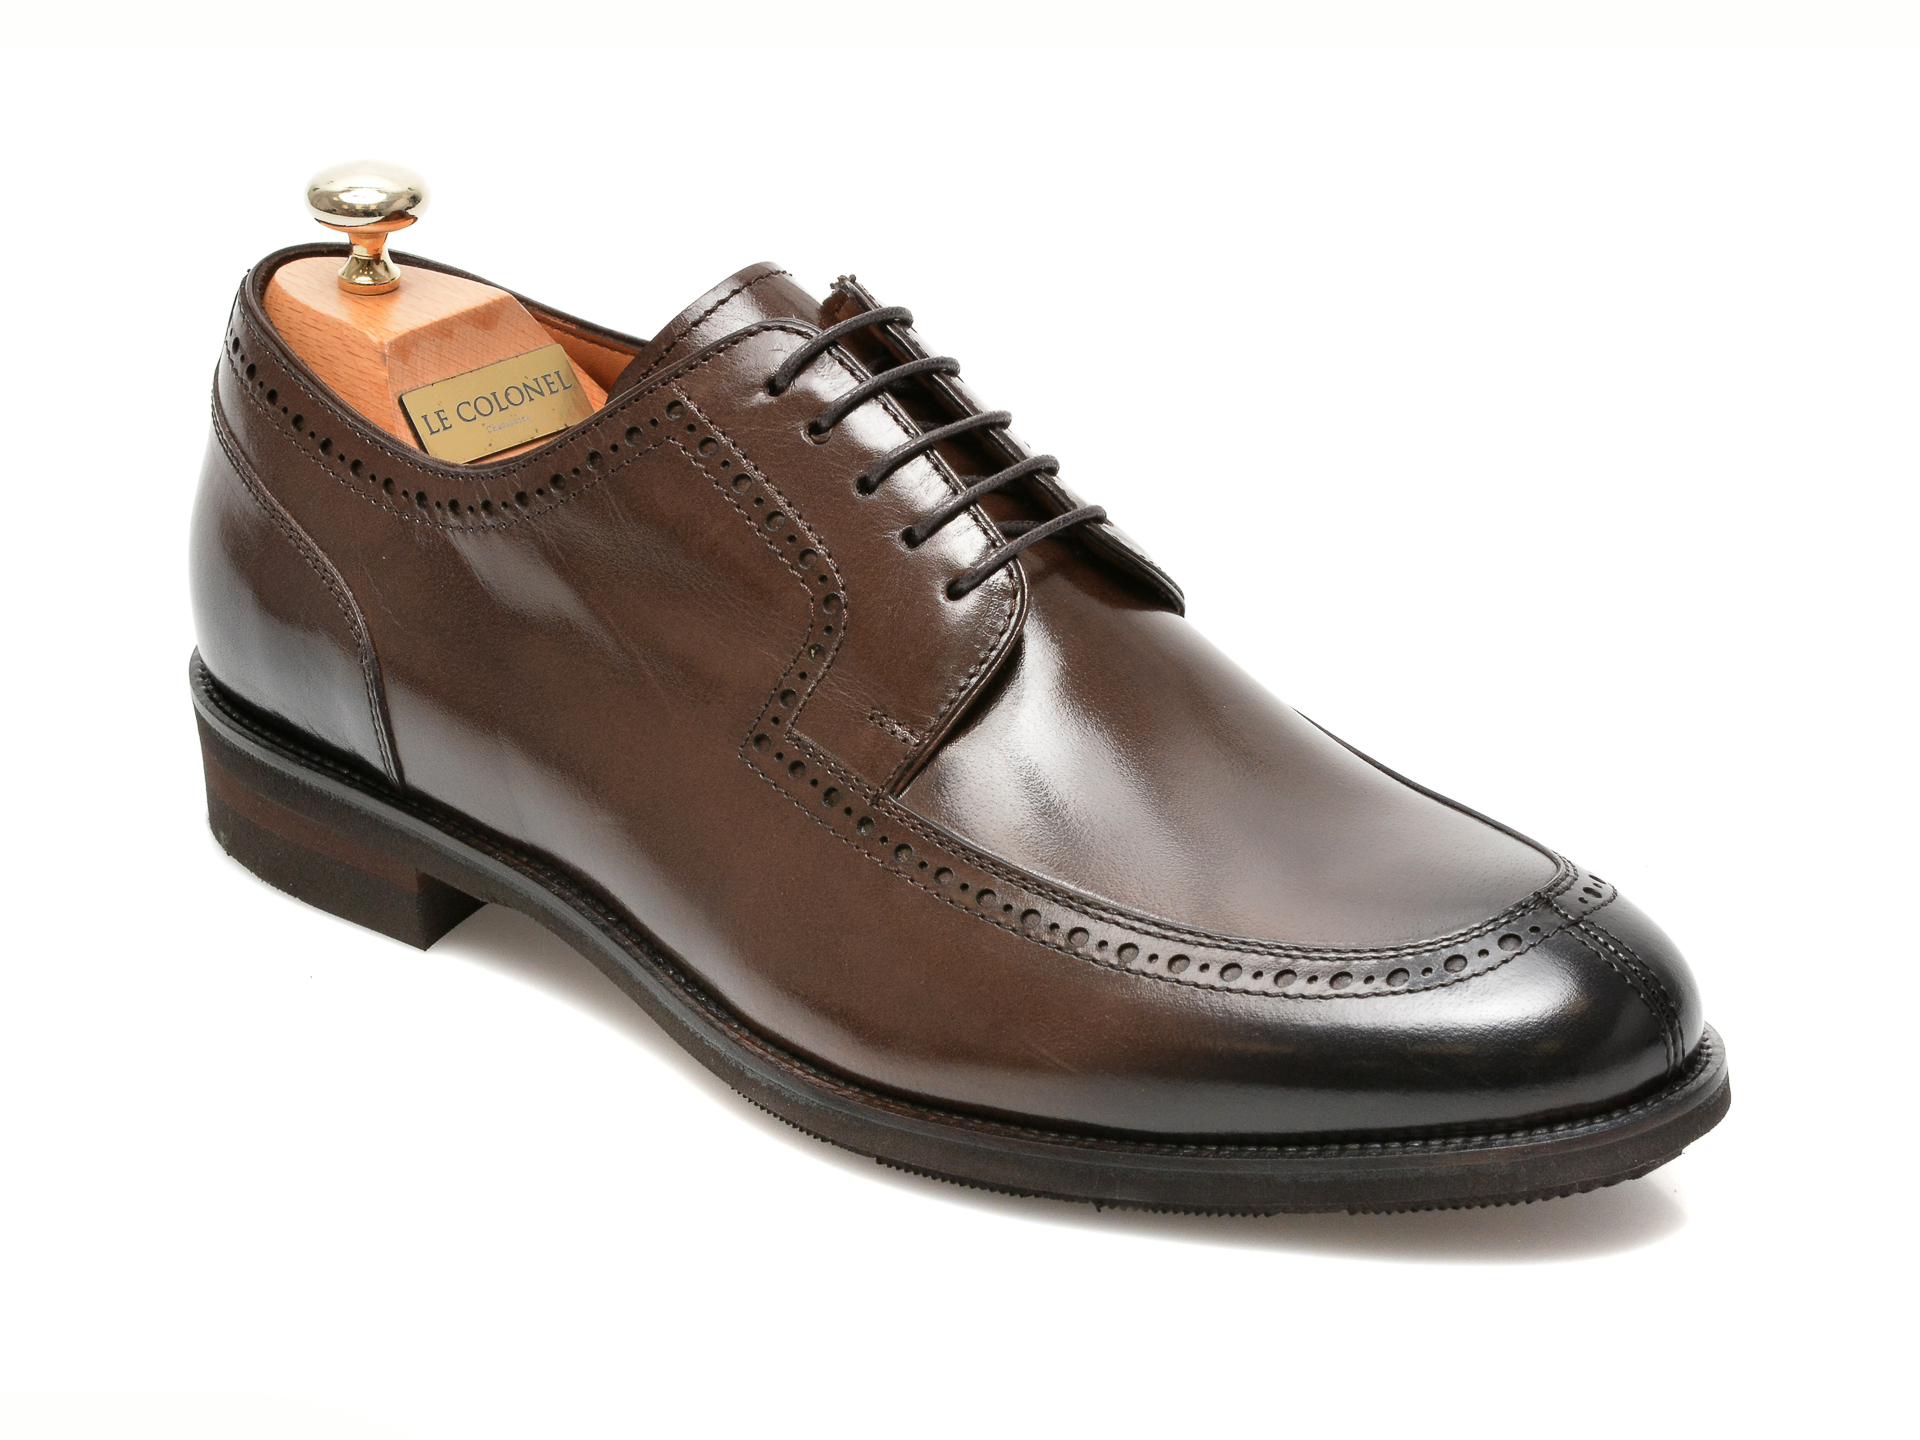 Pantofi LE COLONEL maro, 45279, din piele naturala /barbati/pantofi